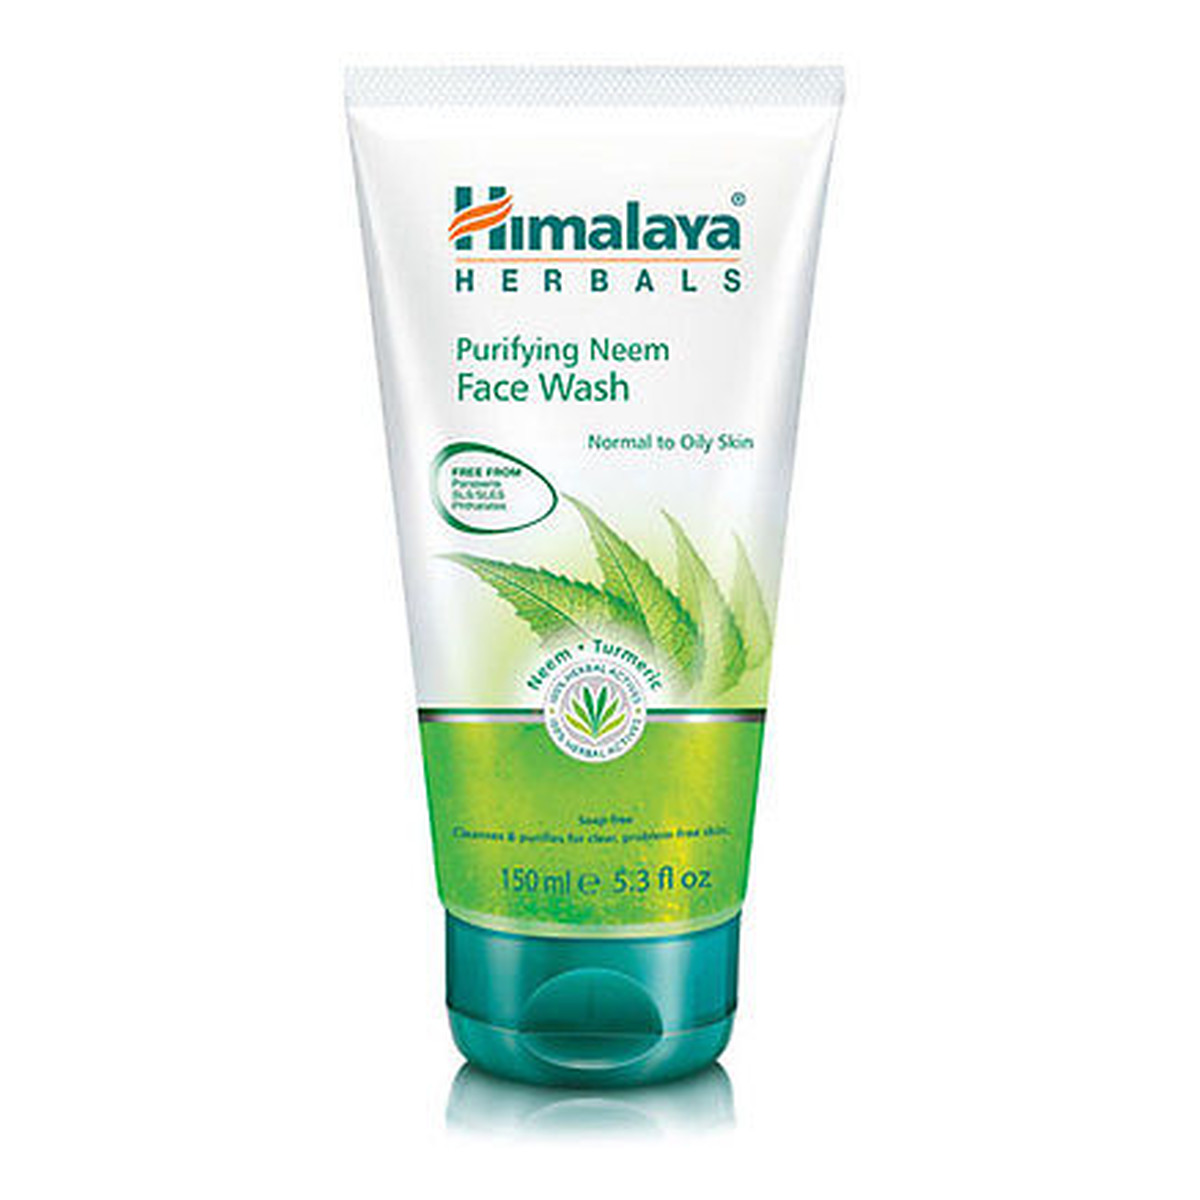 Himalaya Herbals Purifying Neem Face Wash Żel do mycia twarzy 150ml